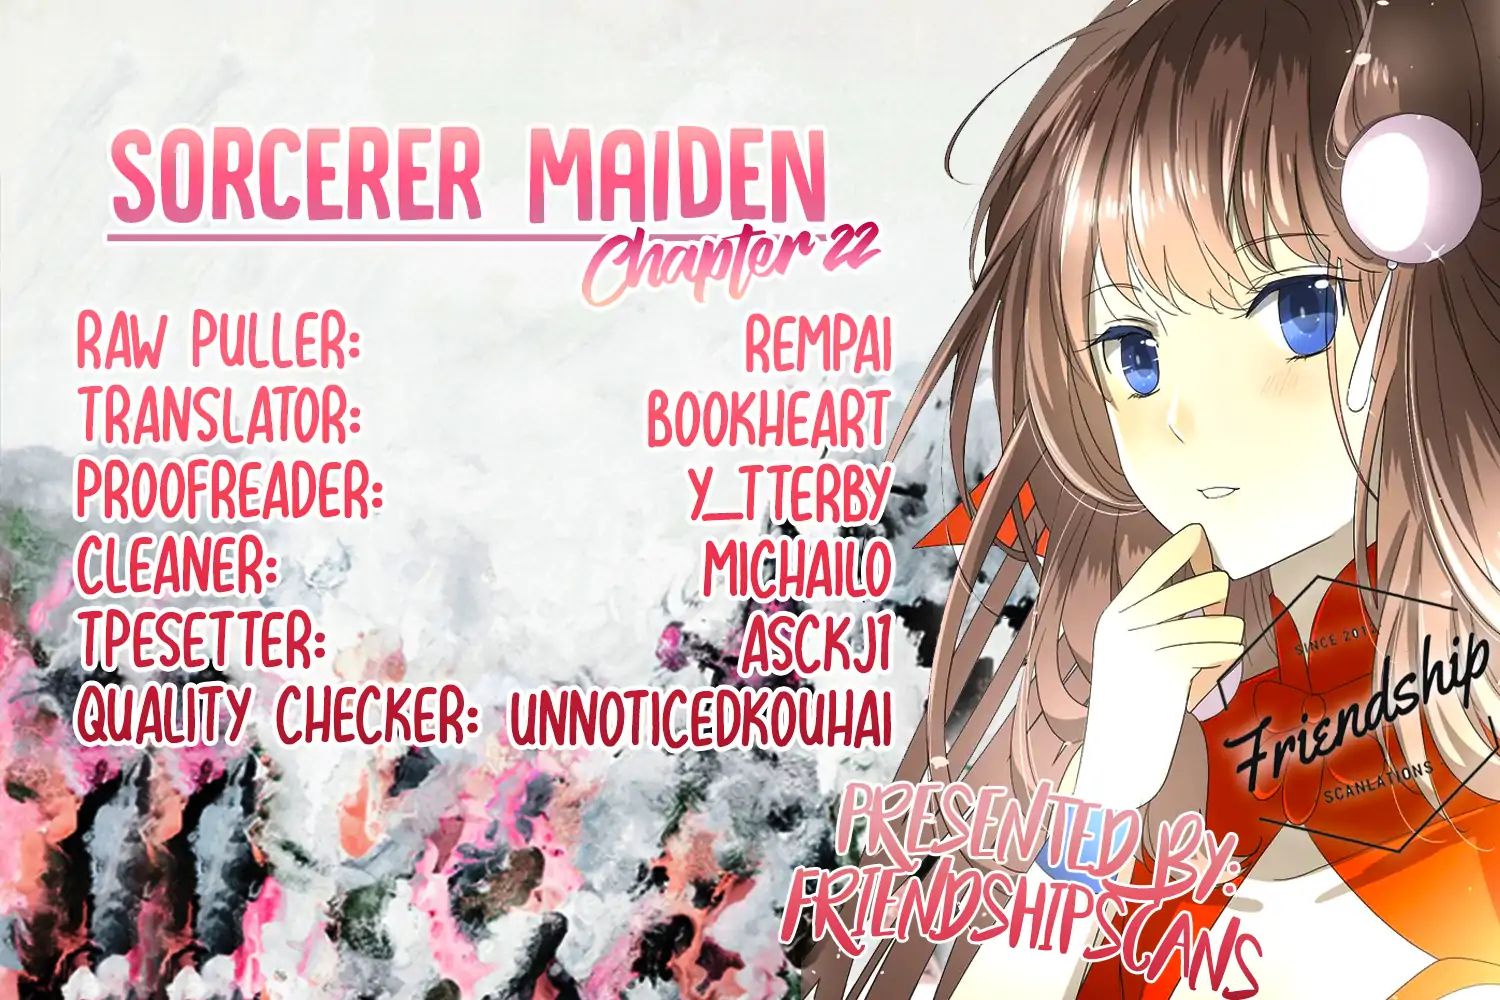 Sorcerer Maiden Chapter 22: Red flower